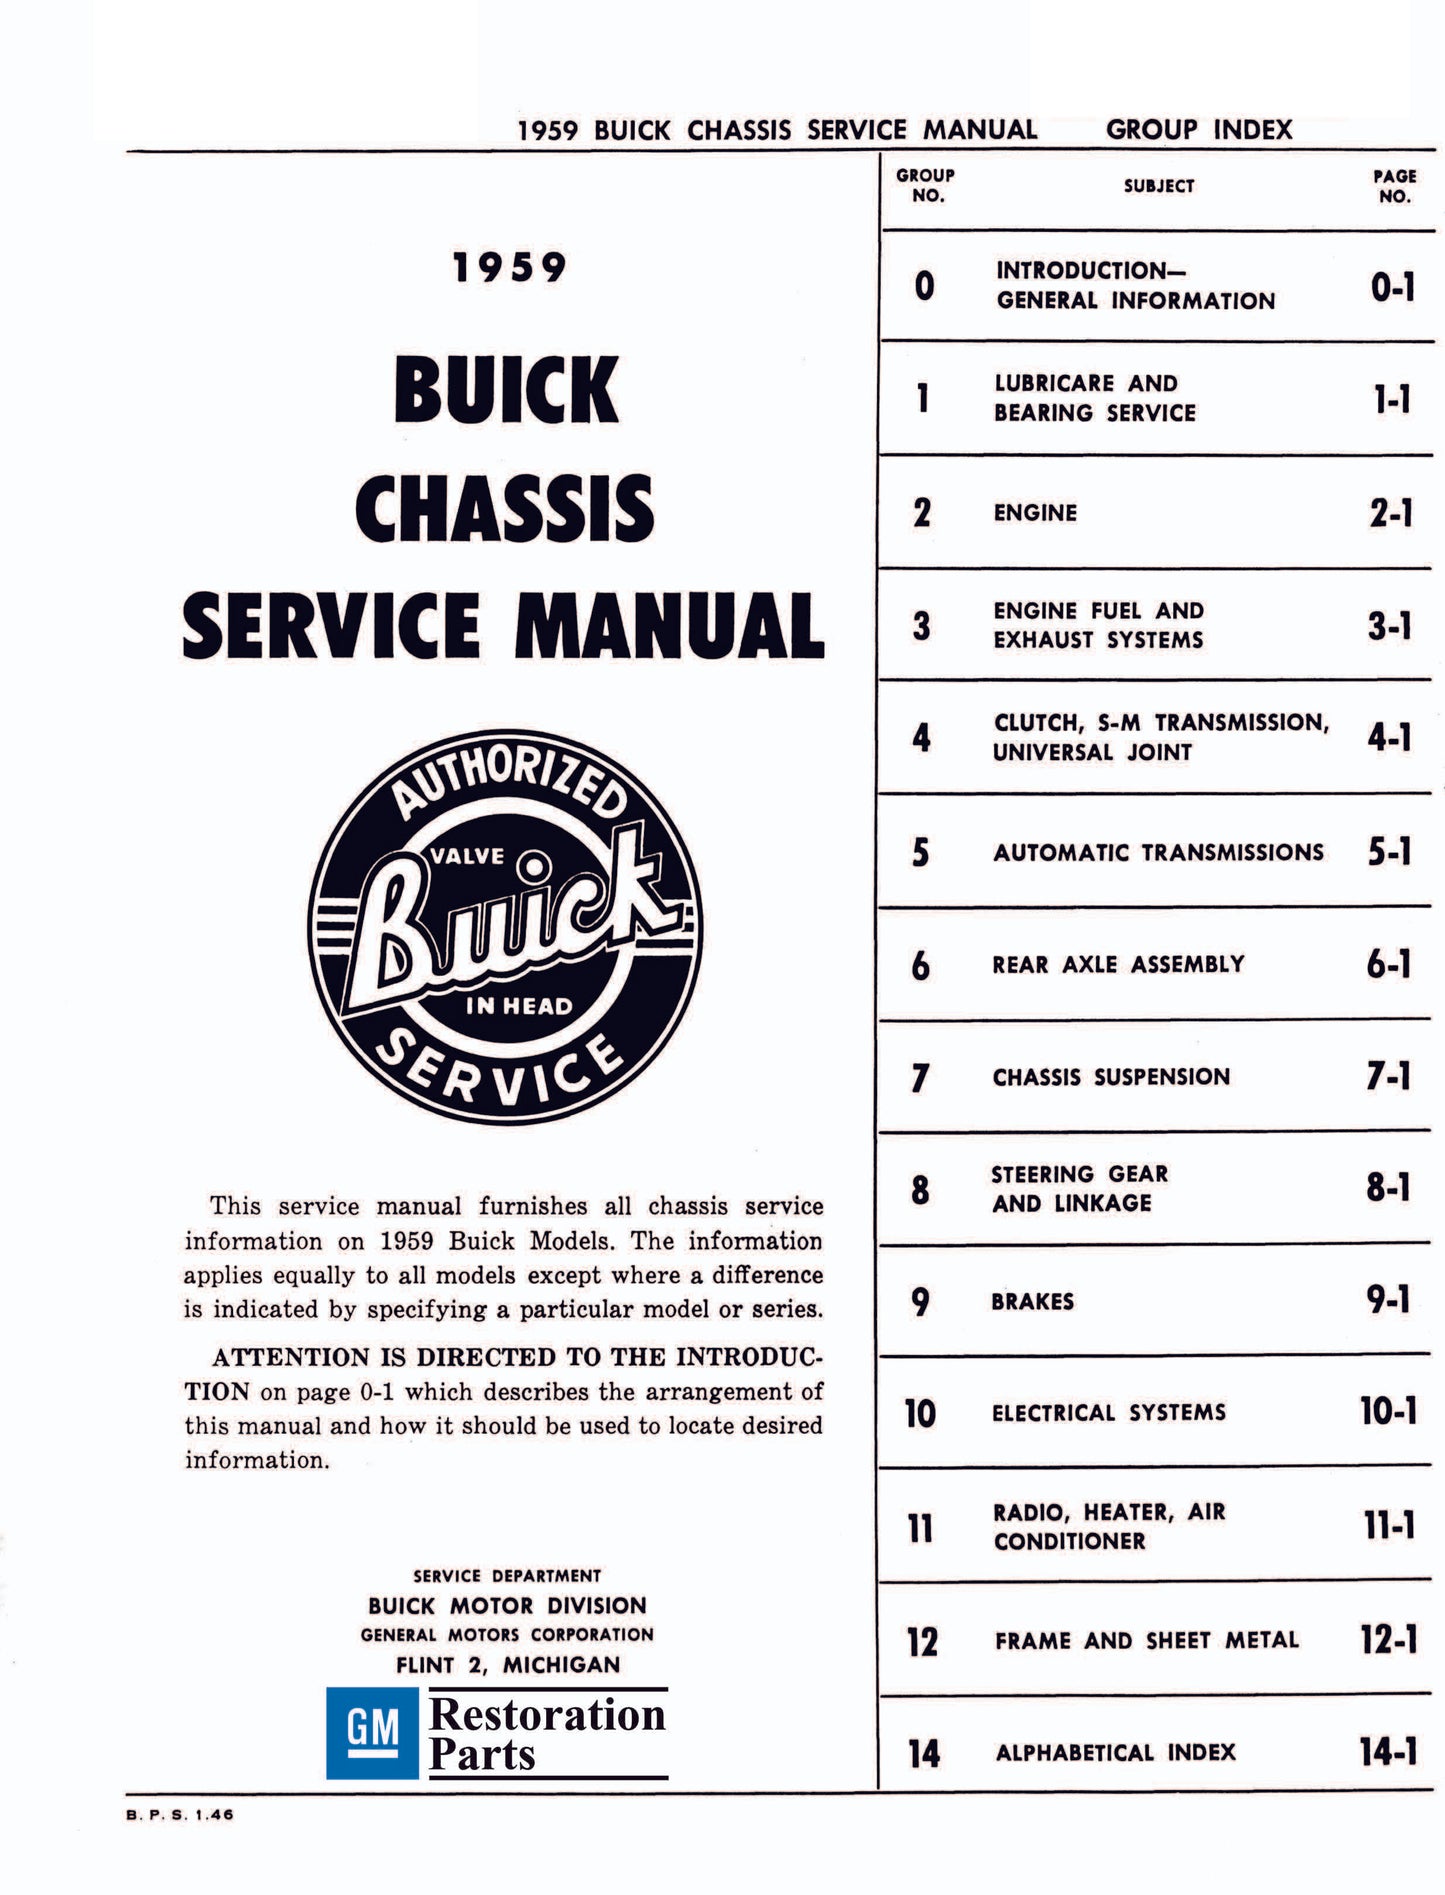 1959 Buick Repair Manual & Body Manual - All Models